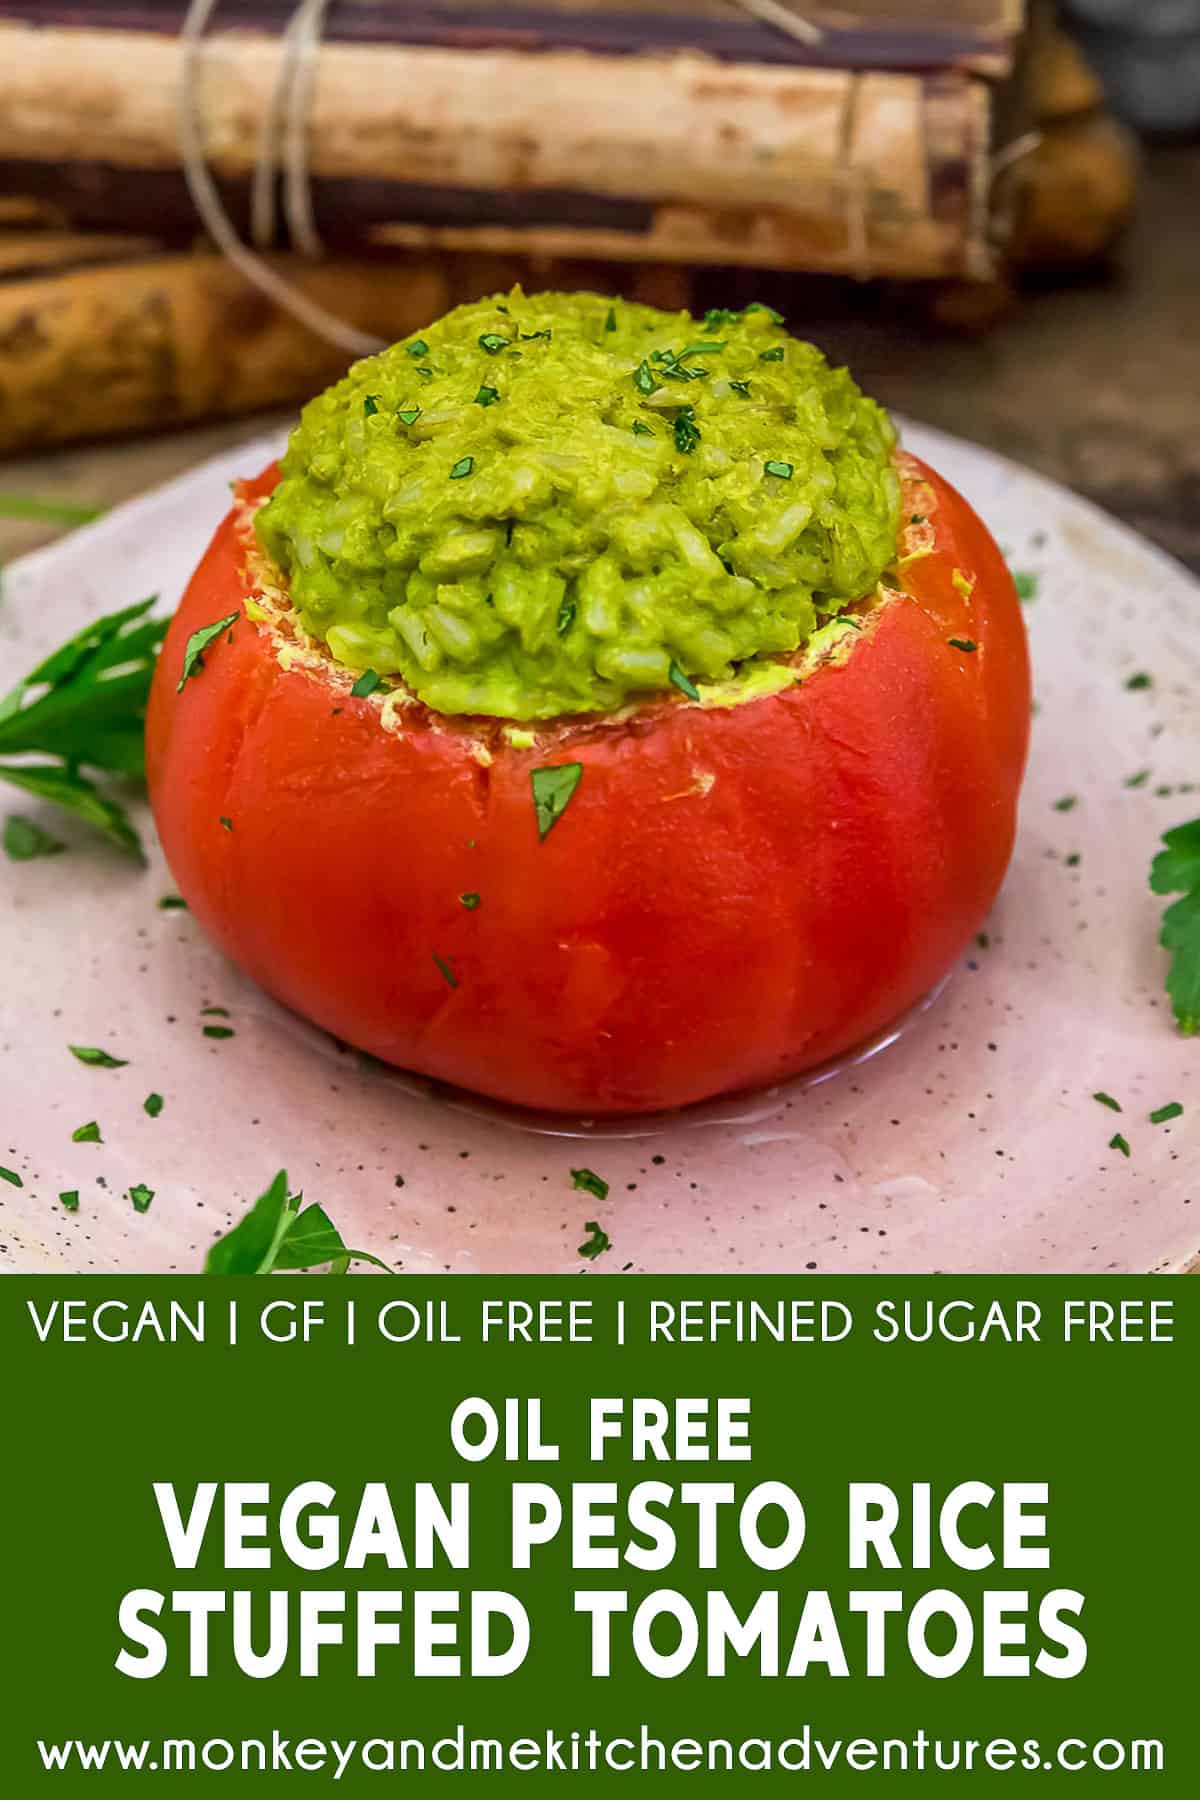 Oil Free Vegan Pesto Rice Stuffed Tomatoes with text description